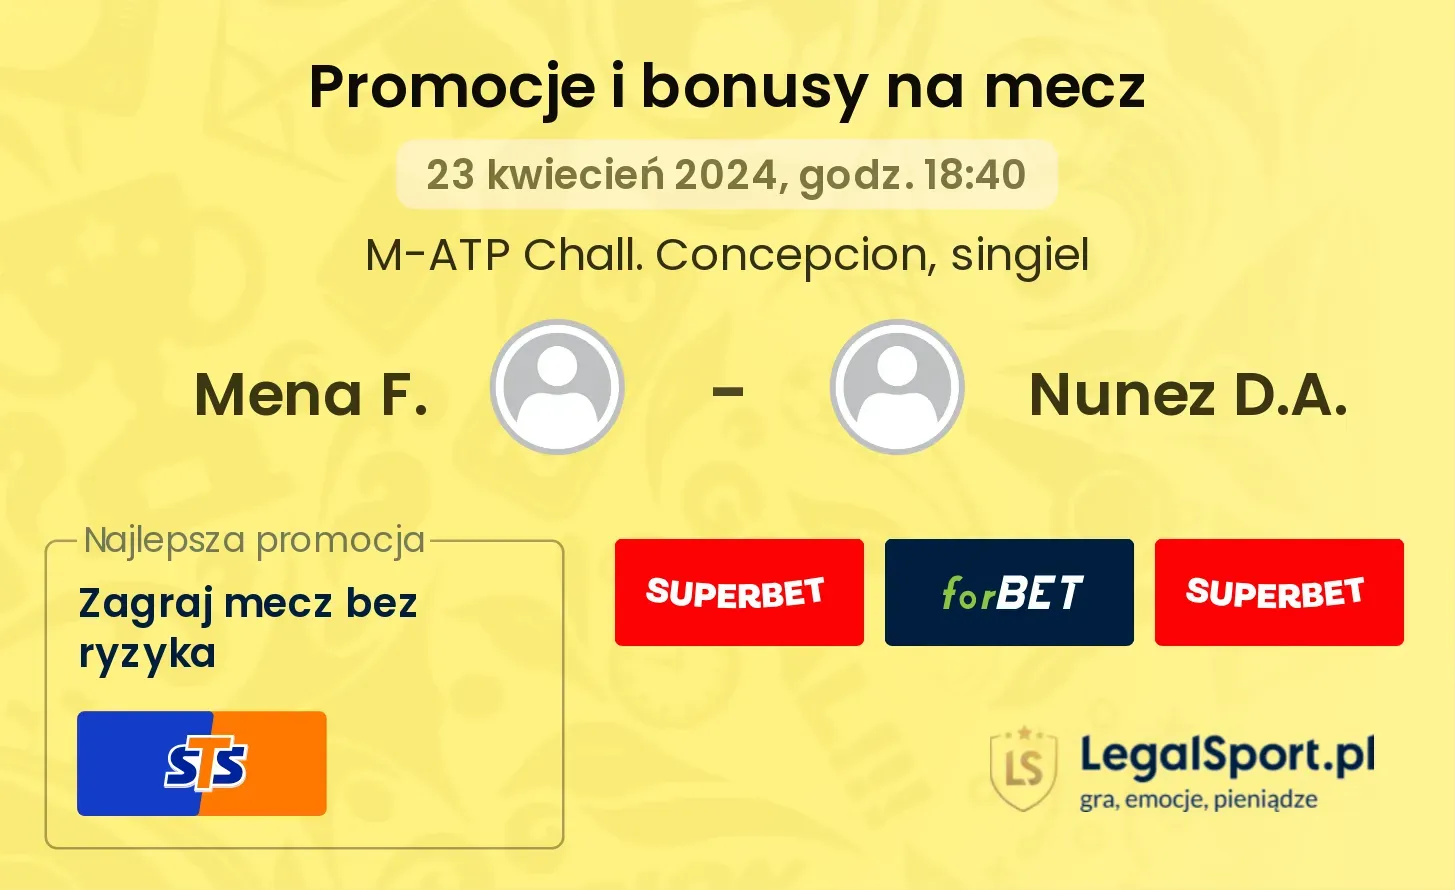 Mena F. - Nunez D.A. promocje bonusy na mecz